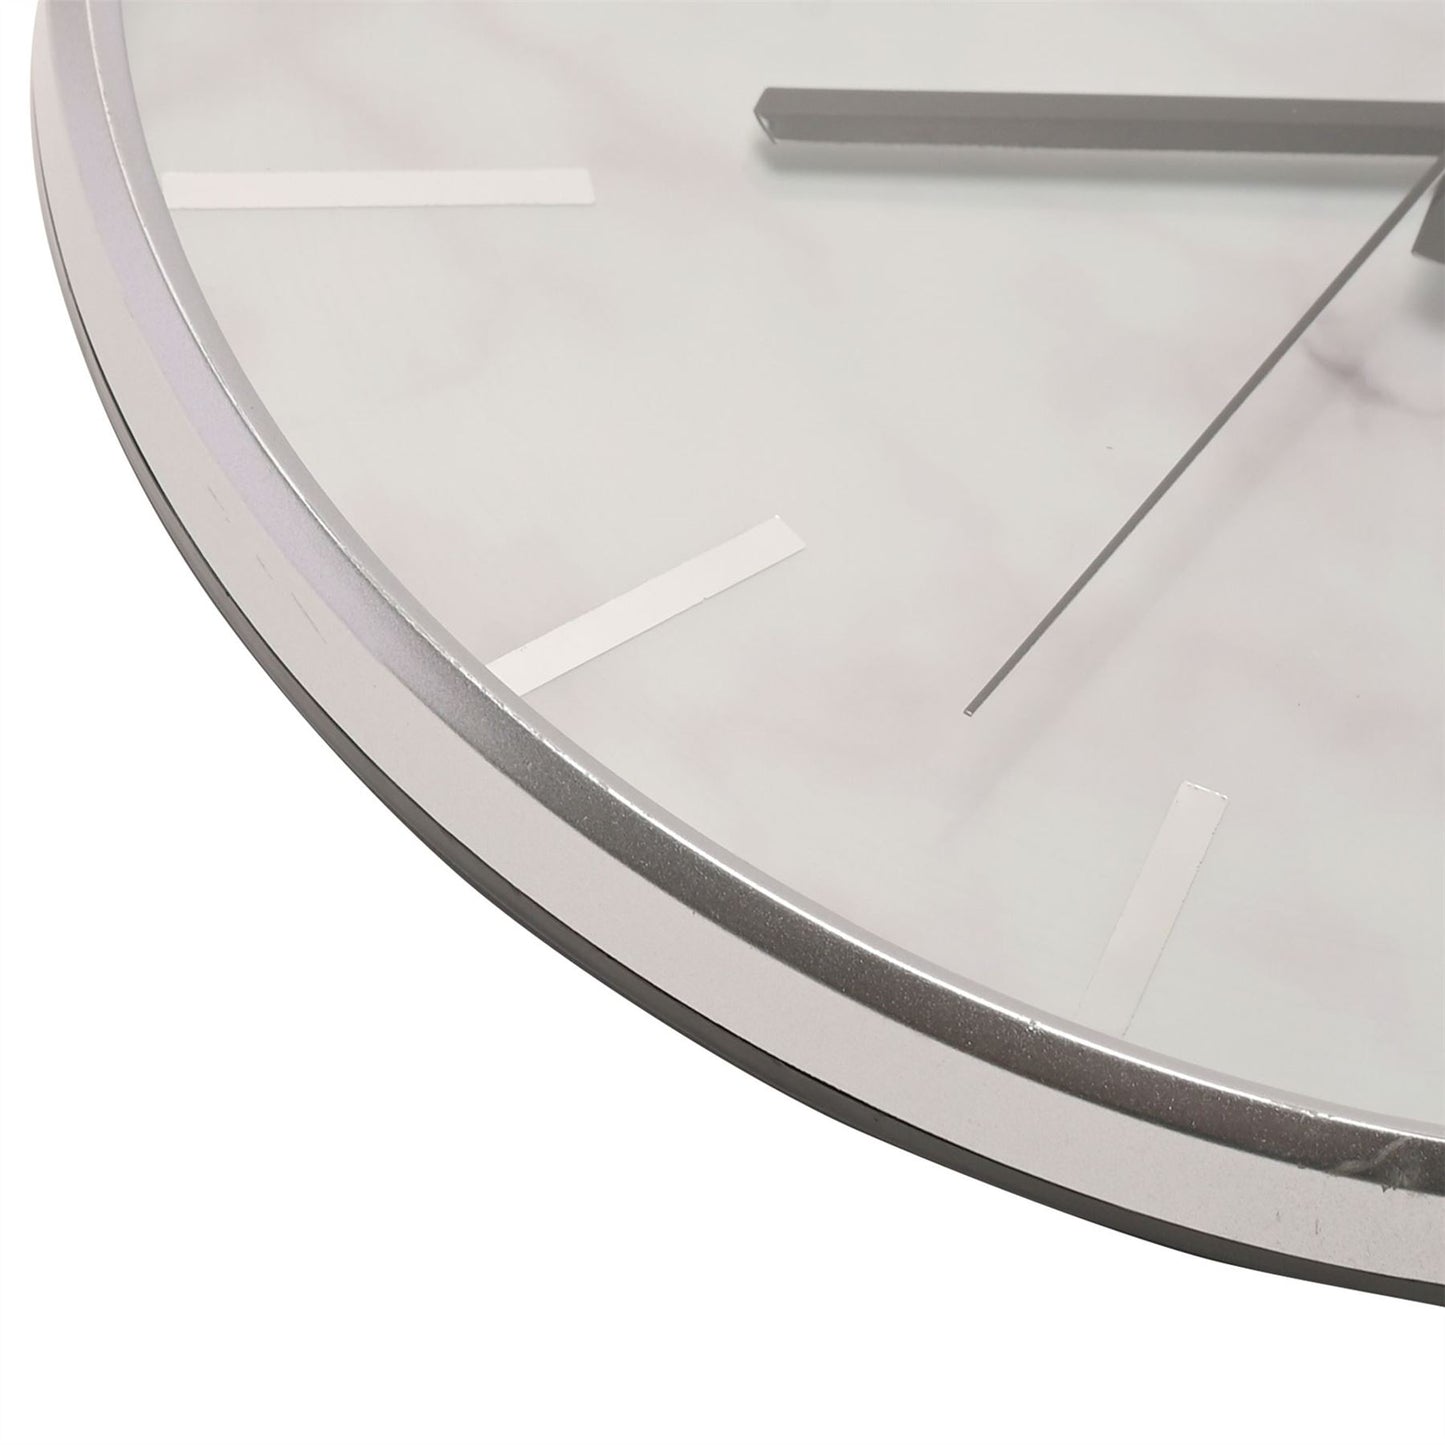 Hometime Slim Line Marble Pattern Wall Clock 31cm - Silver